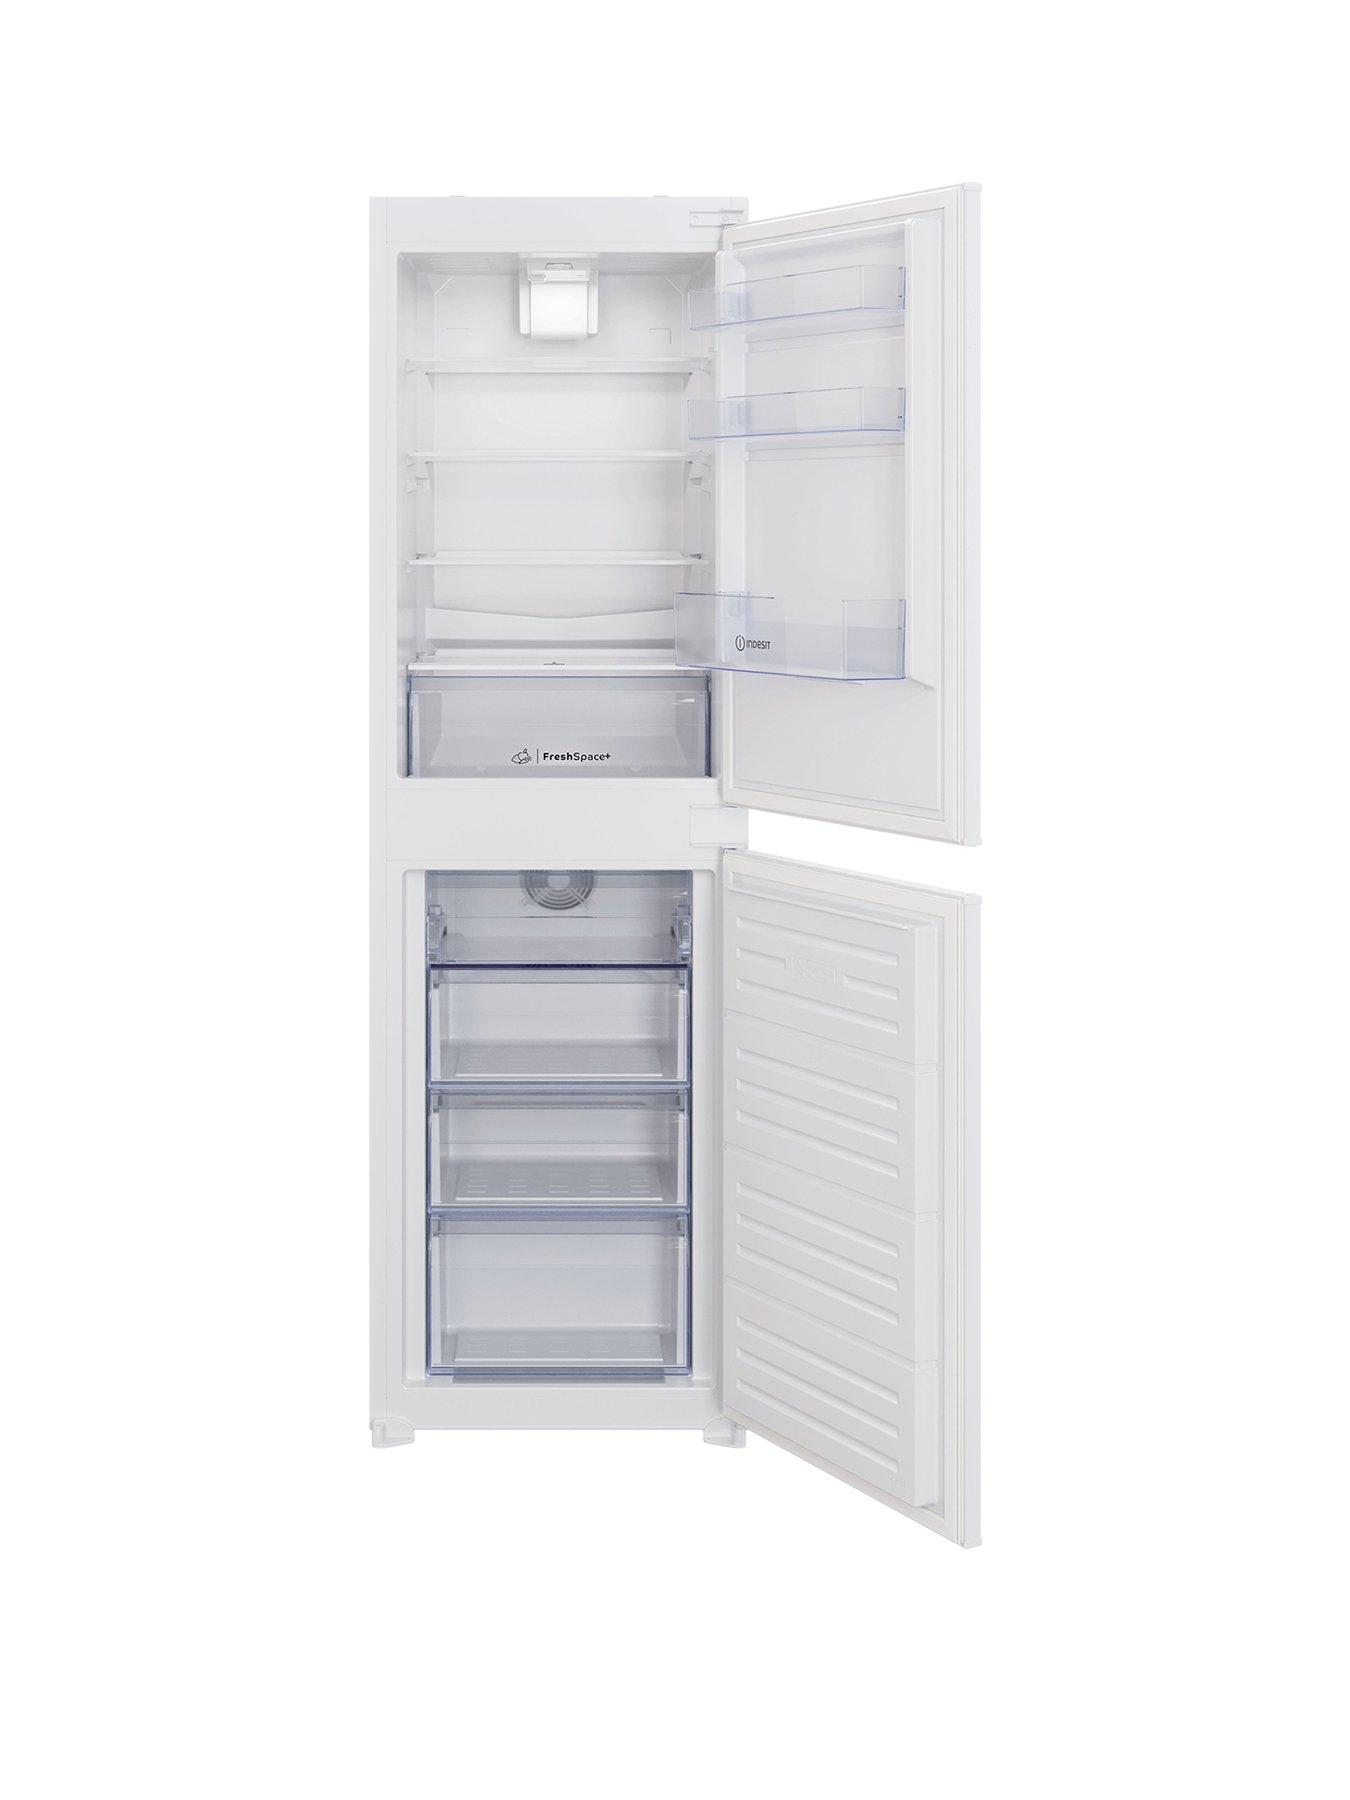 Product photograph of Indesit Ibc185050f1 55cm Integrated Fridge Freezer - White - Fridge Freezer Only from very.co.uk